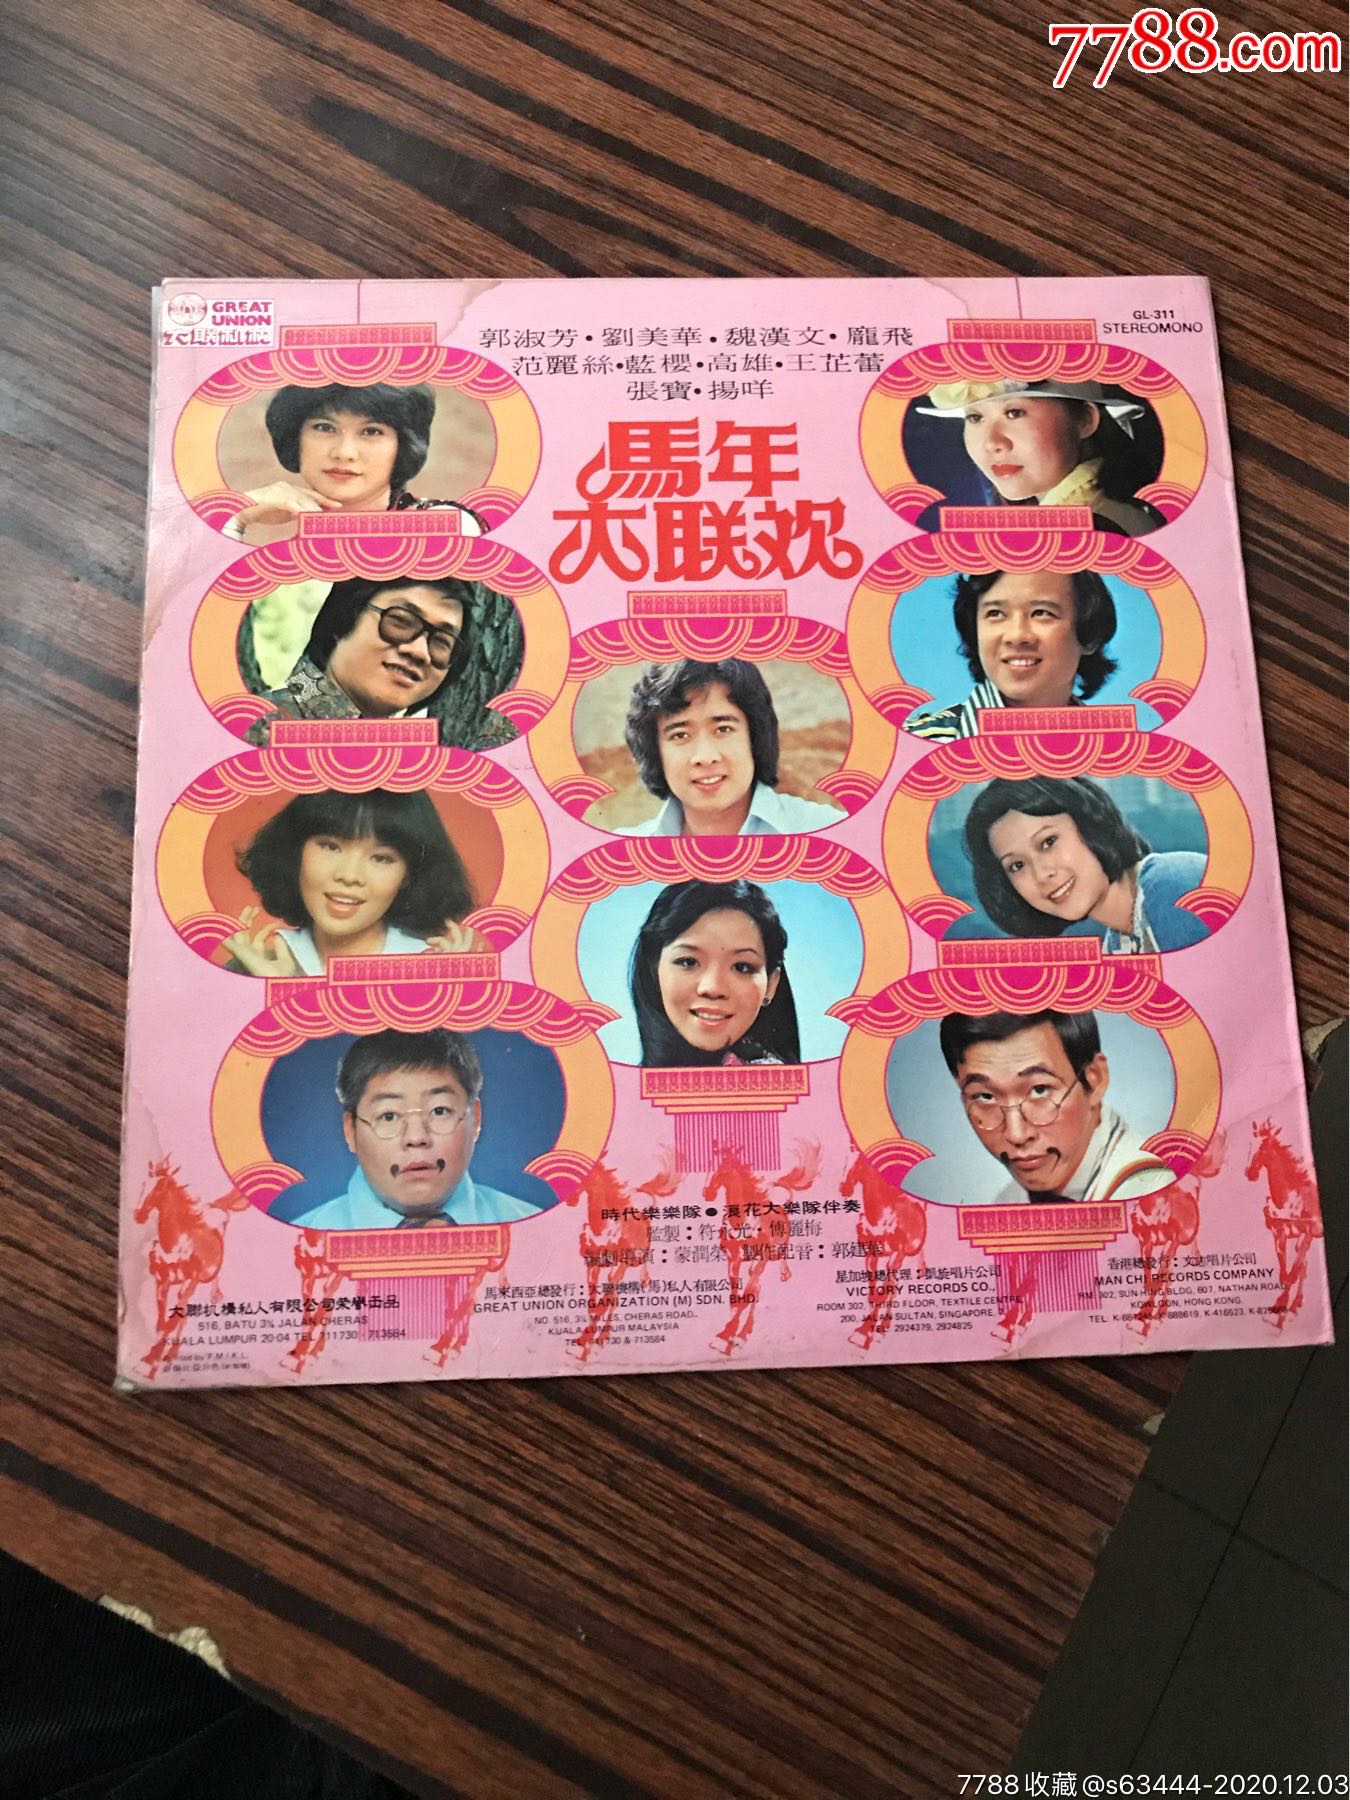 ‎Apple Music 上刘美华 & 庞飞的专辑《刘美华&庞飞之歌, Vol. 1 (修复版)》